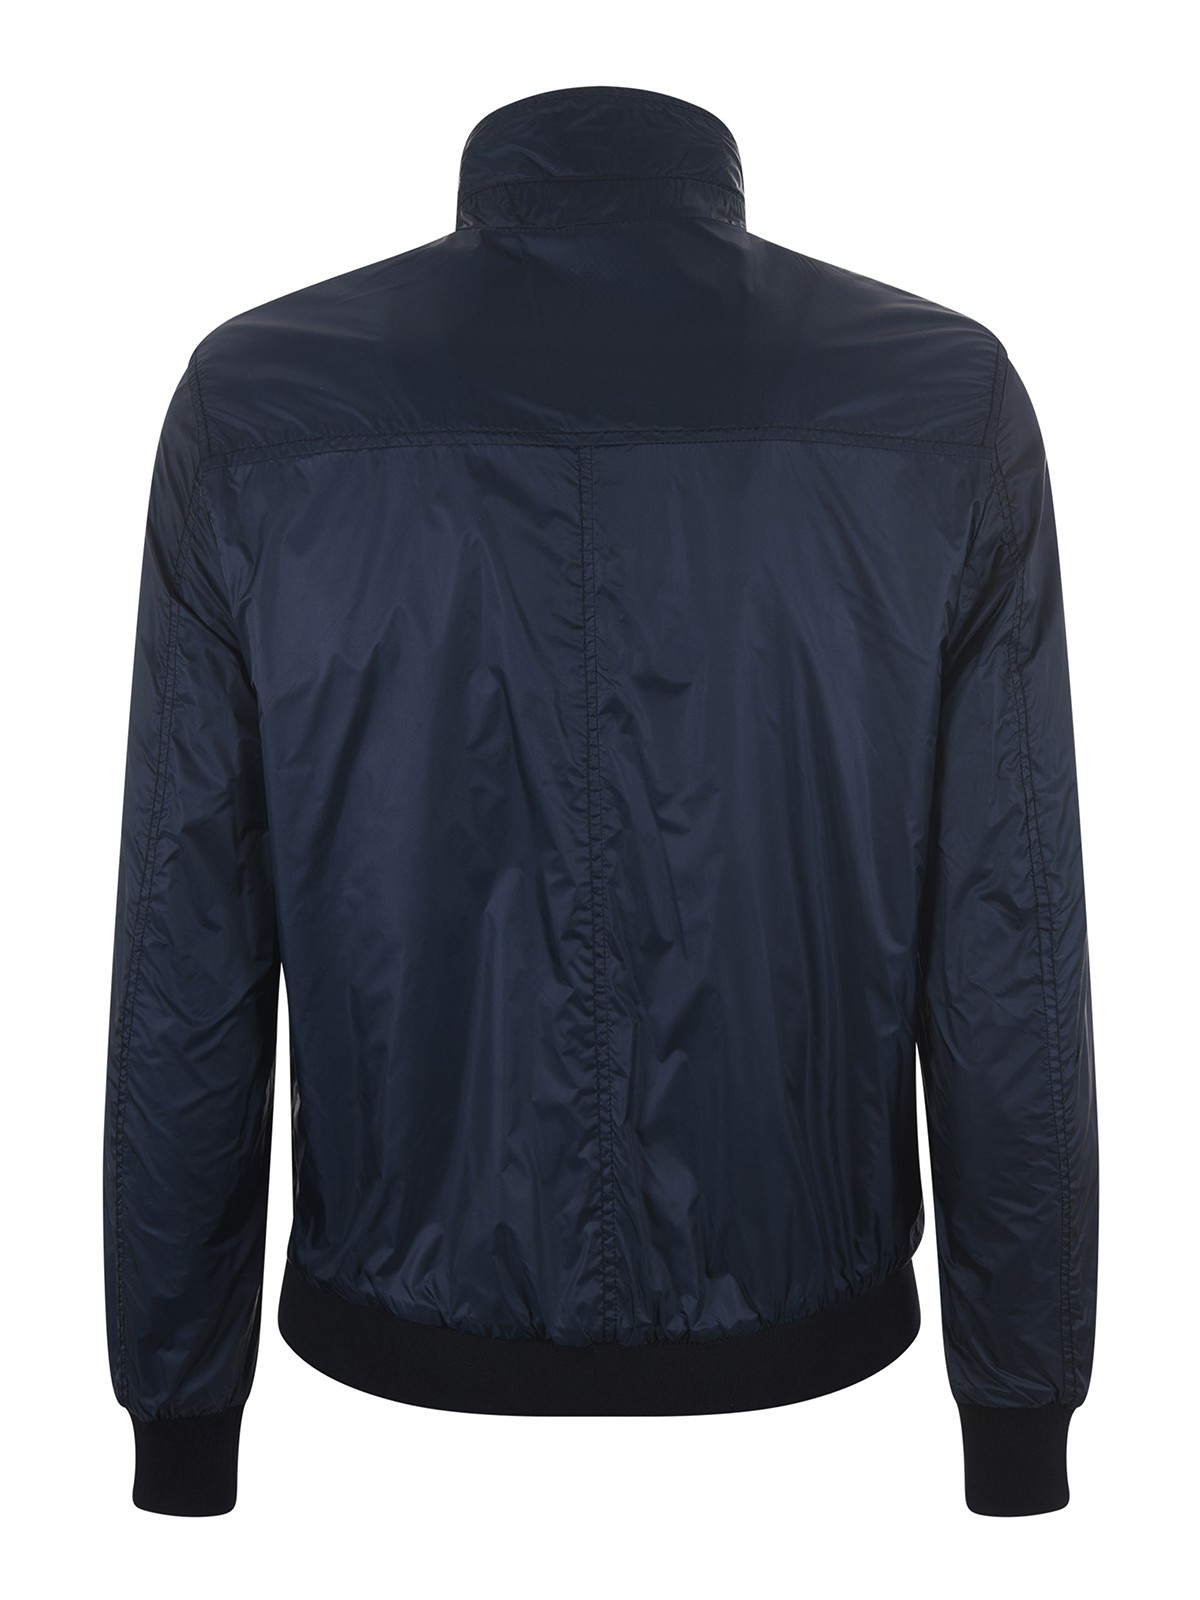 Shop The Jack Leathers Reversible Jacket In Black